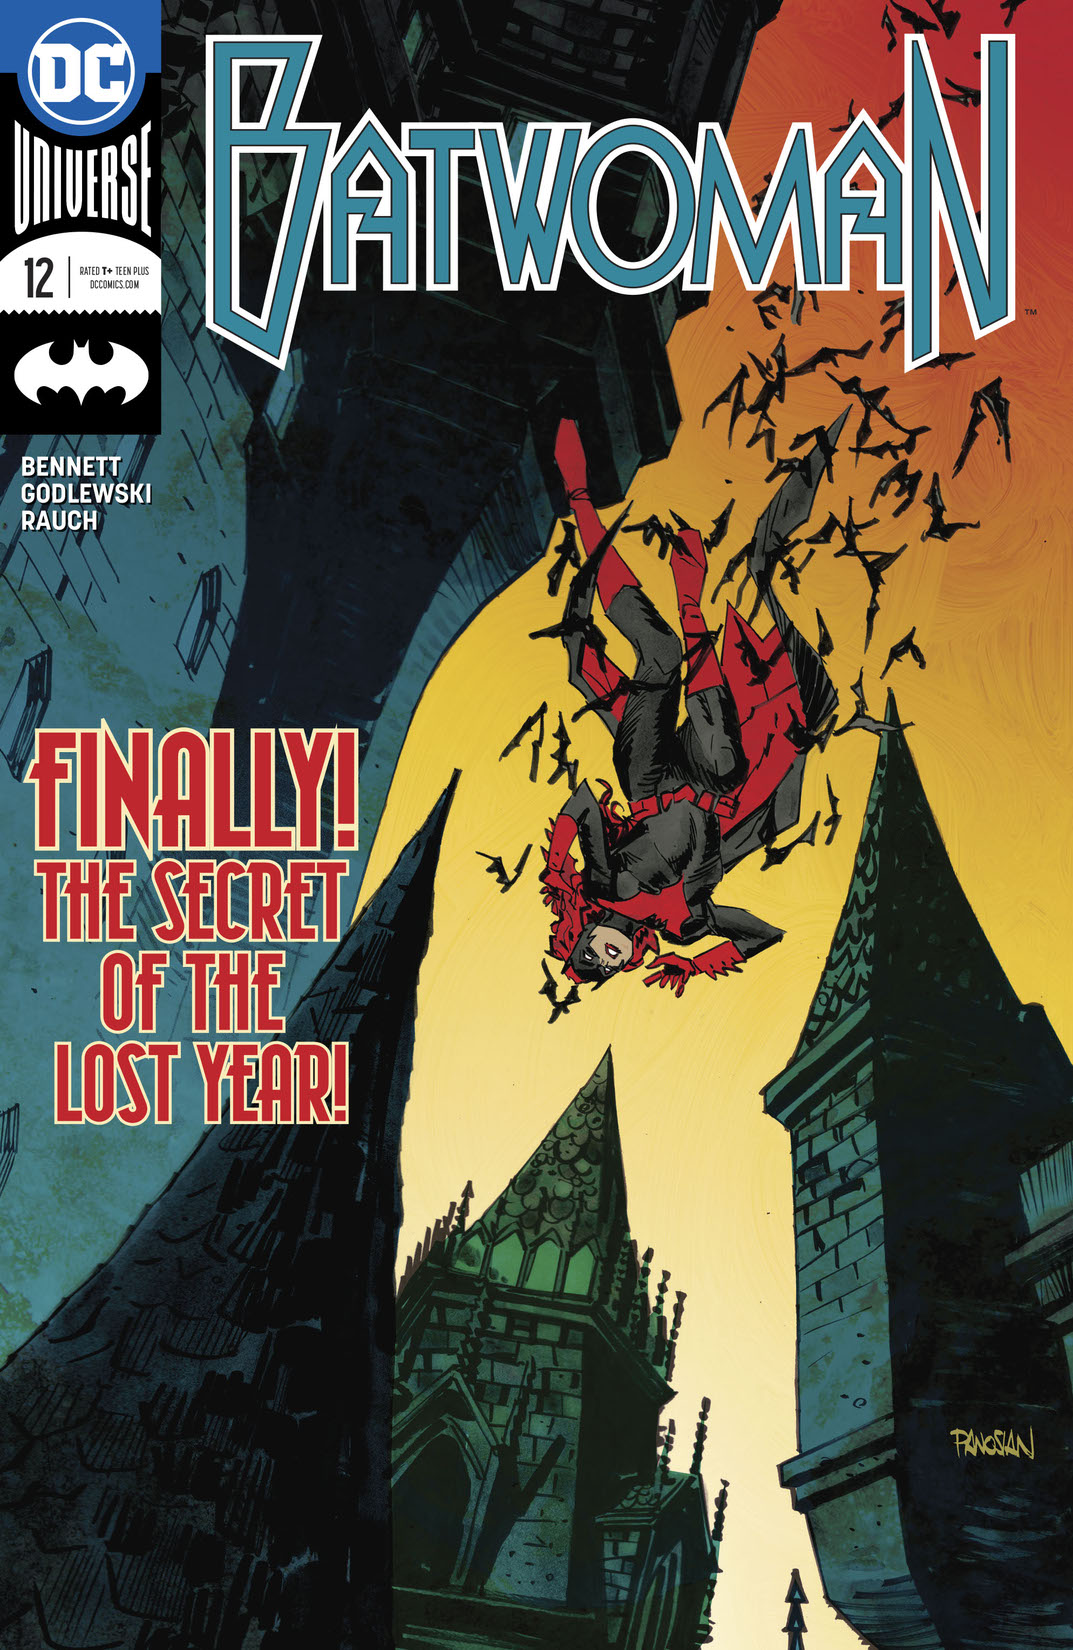 Batwoman (2017-) #12 preview images